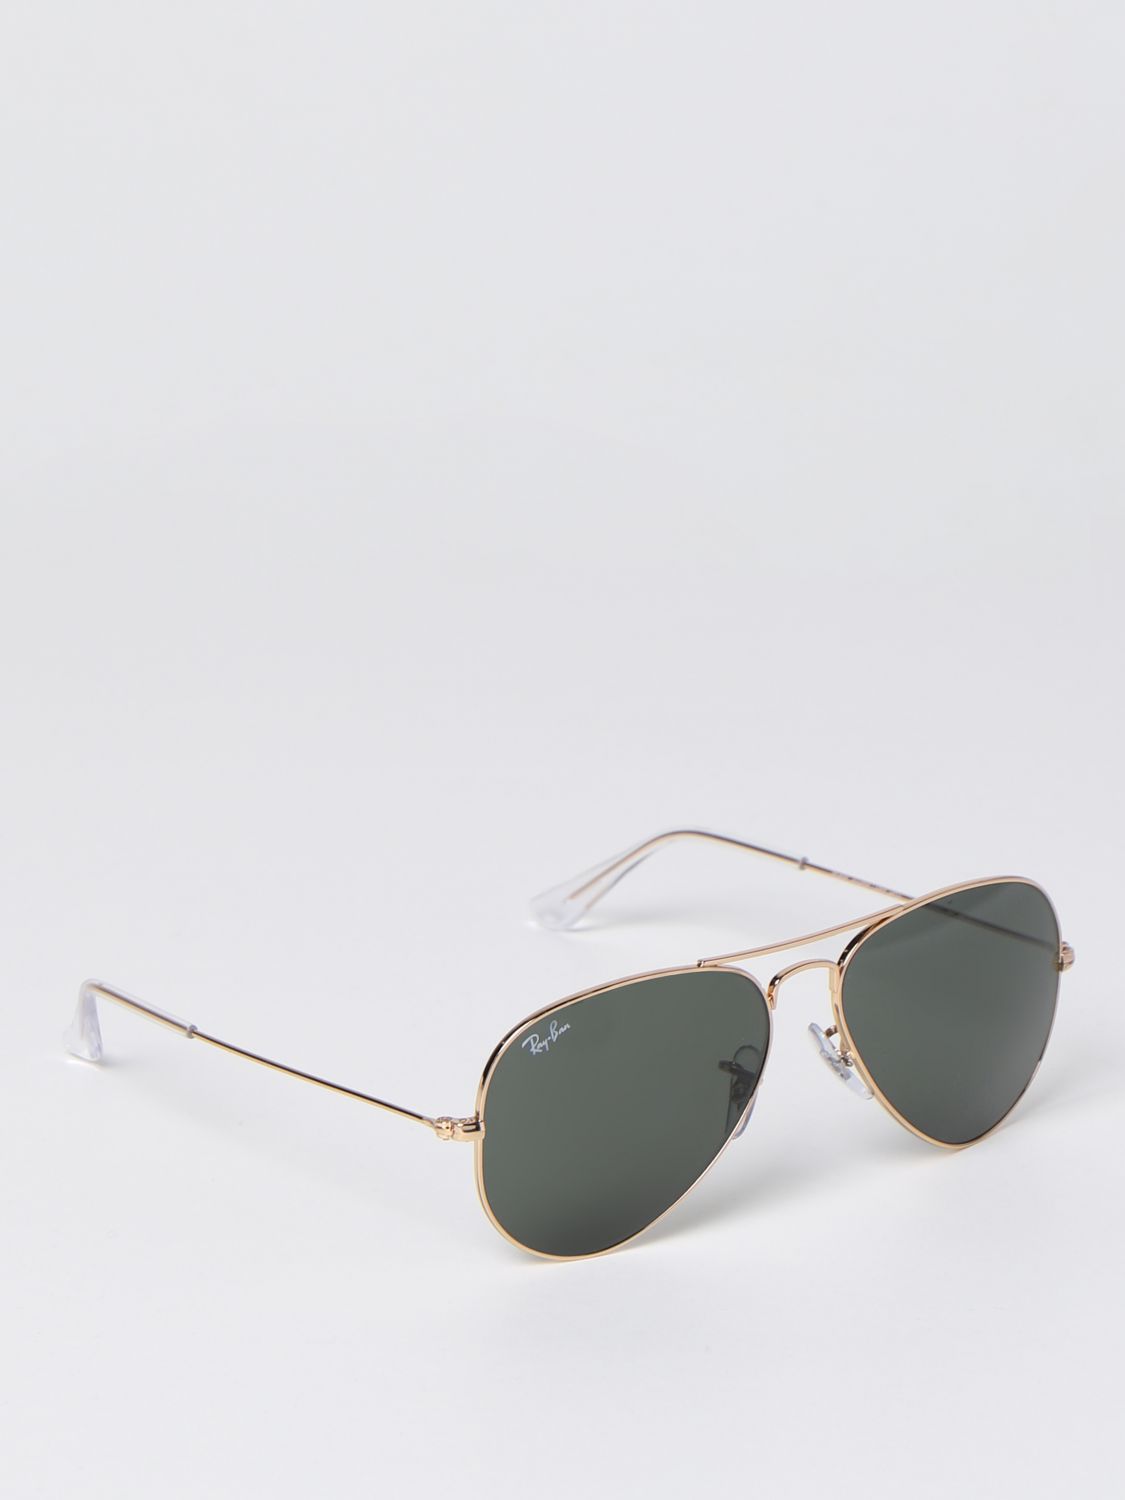 Sunglasses Ray-Ban: Ray-Ban RB 3025 Aviator sunglasses green 1